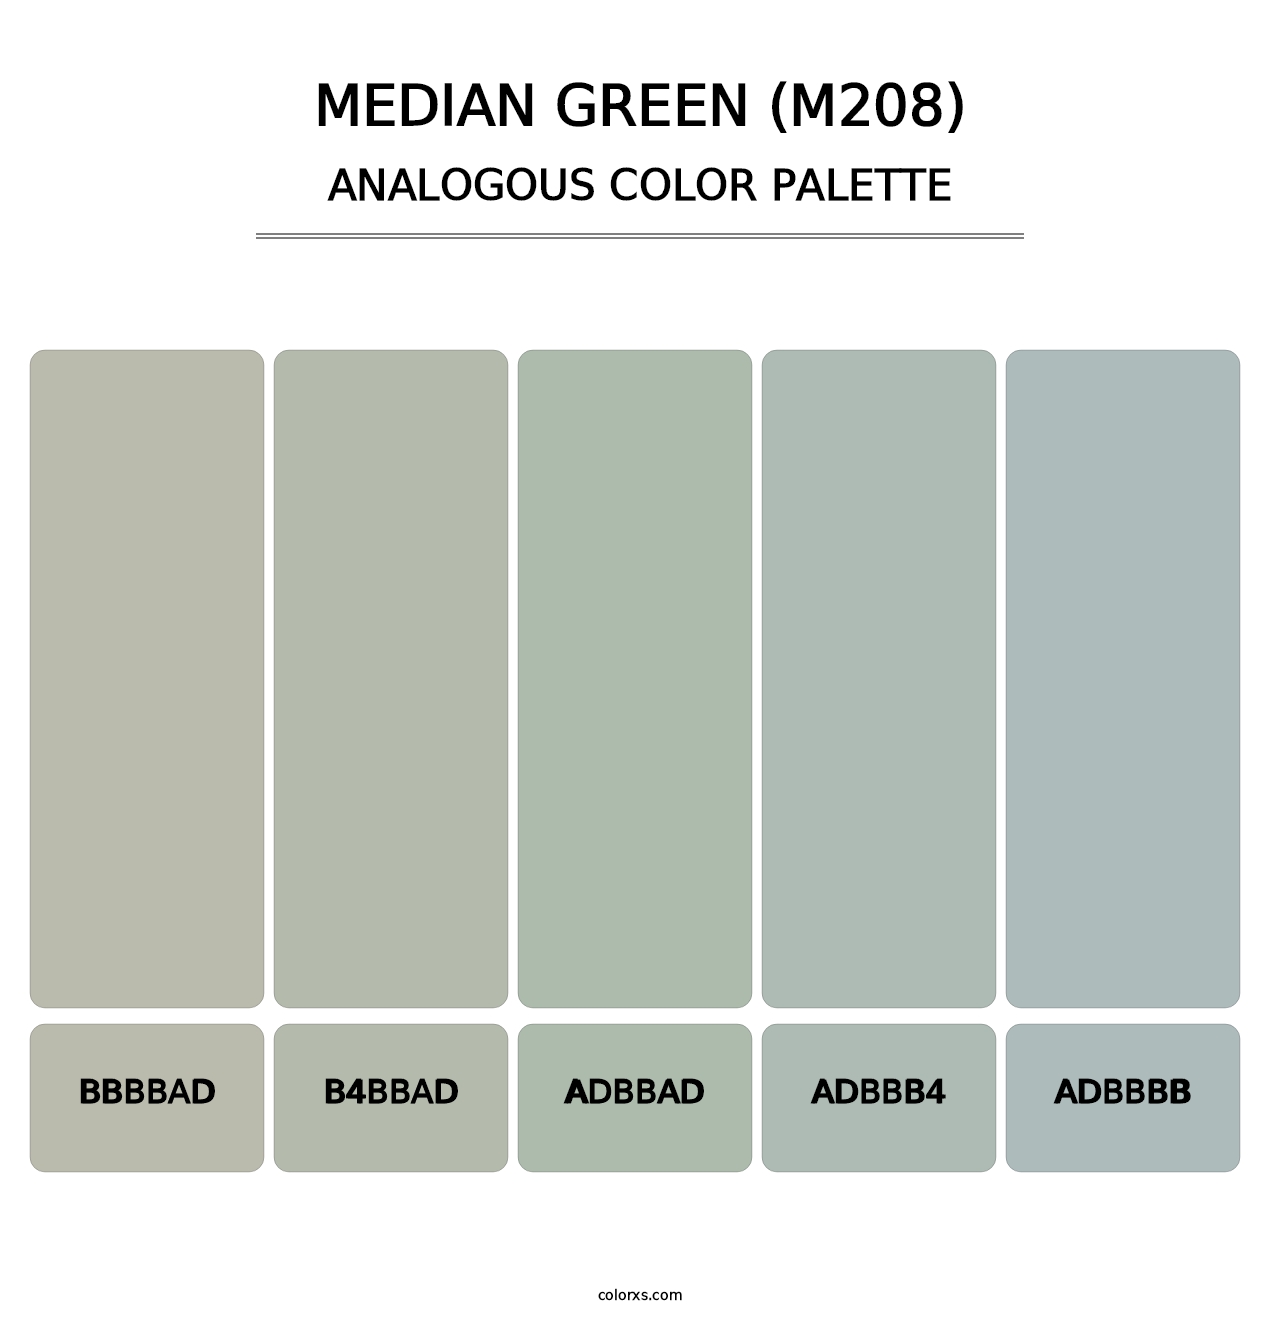 Median Green (M208) - Analogous Color Palette